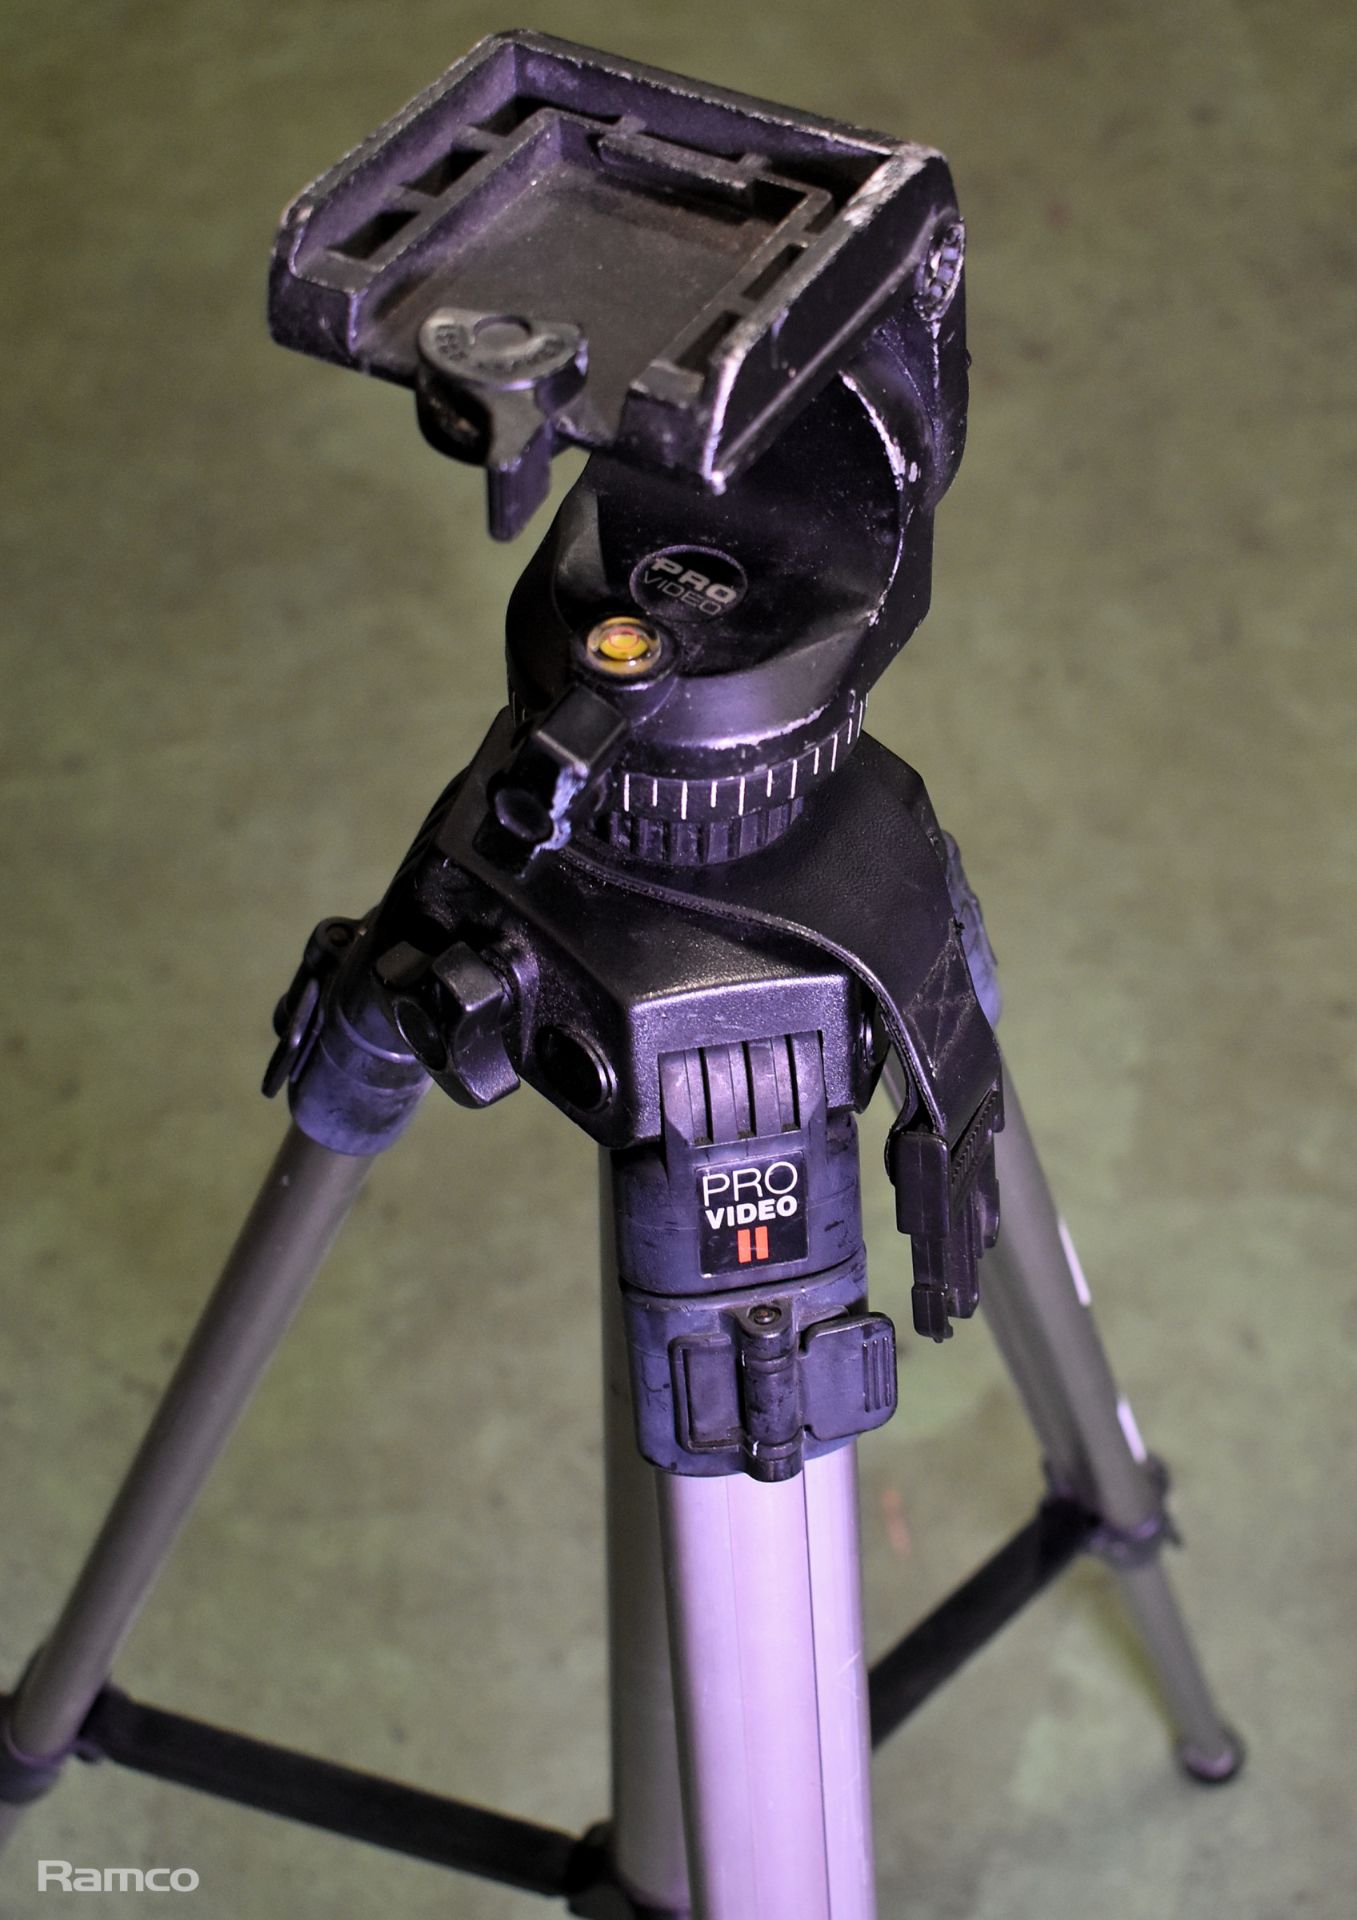 PRO Video 2 camera tripod - leg clamps broken - Image 4 of 6